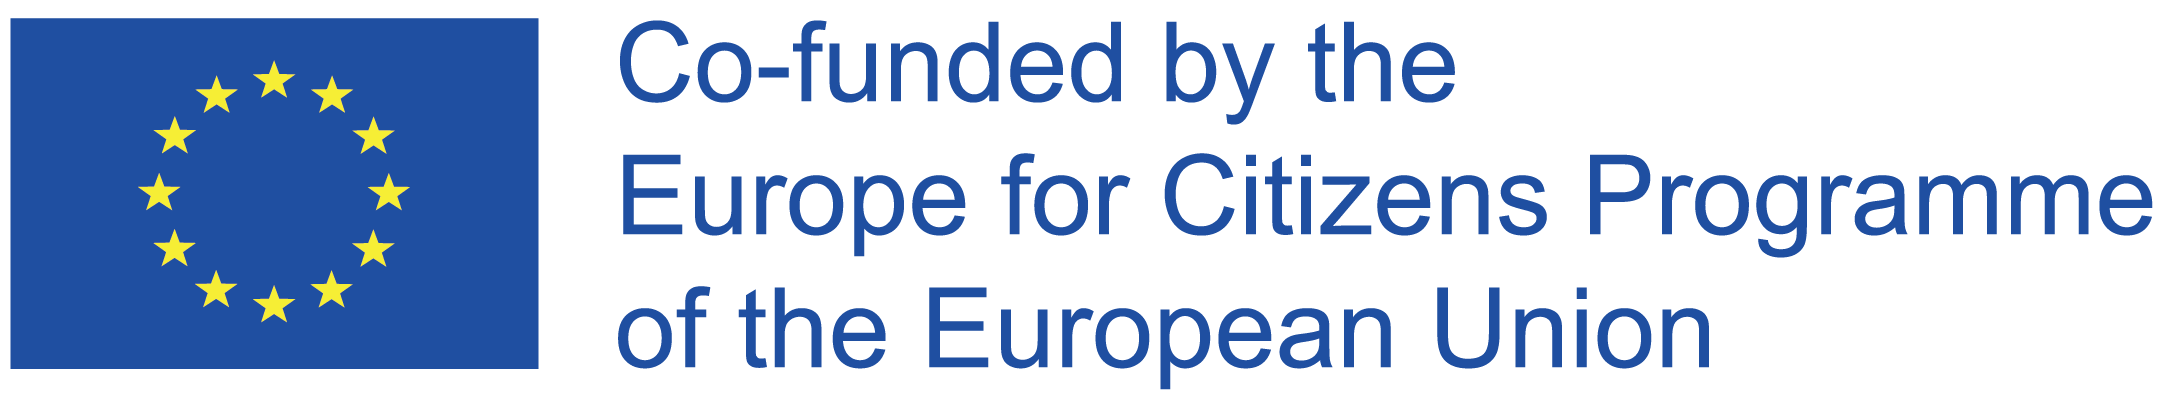 Europe for Citizens Programme logo